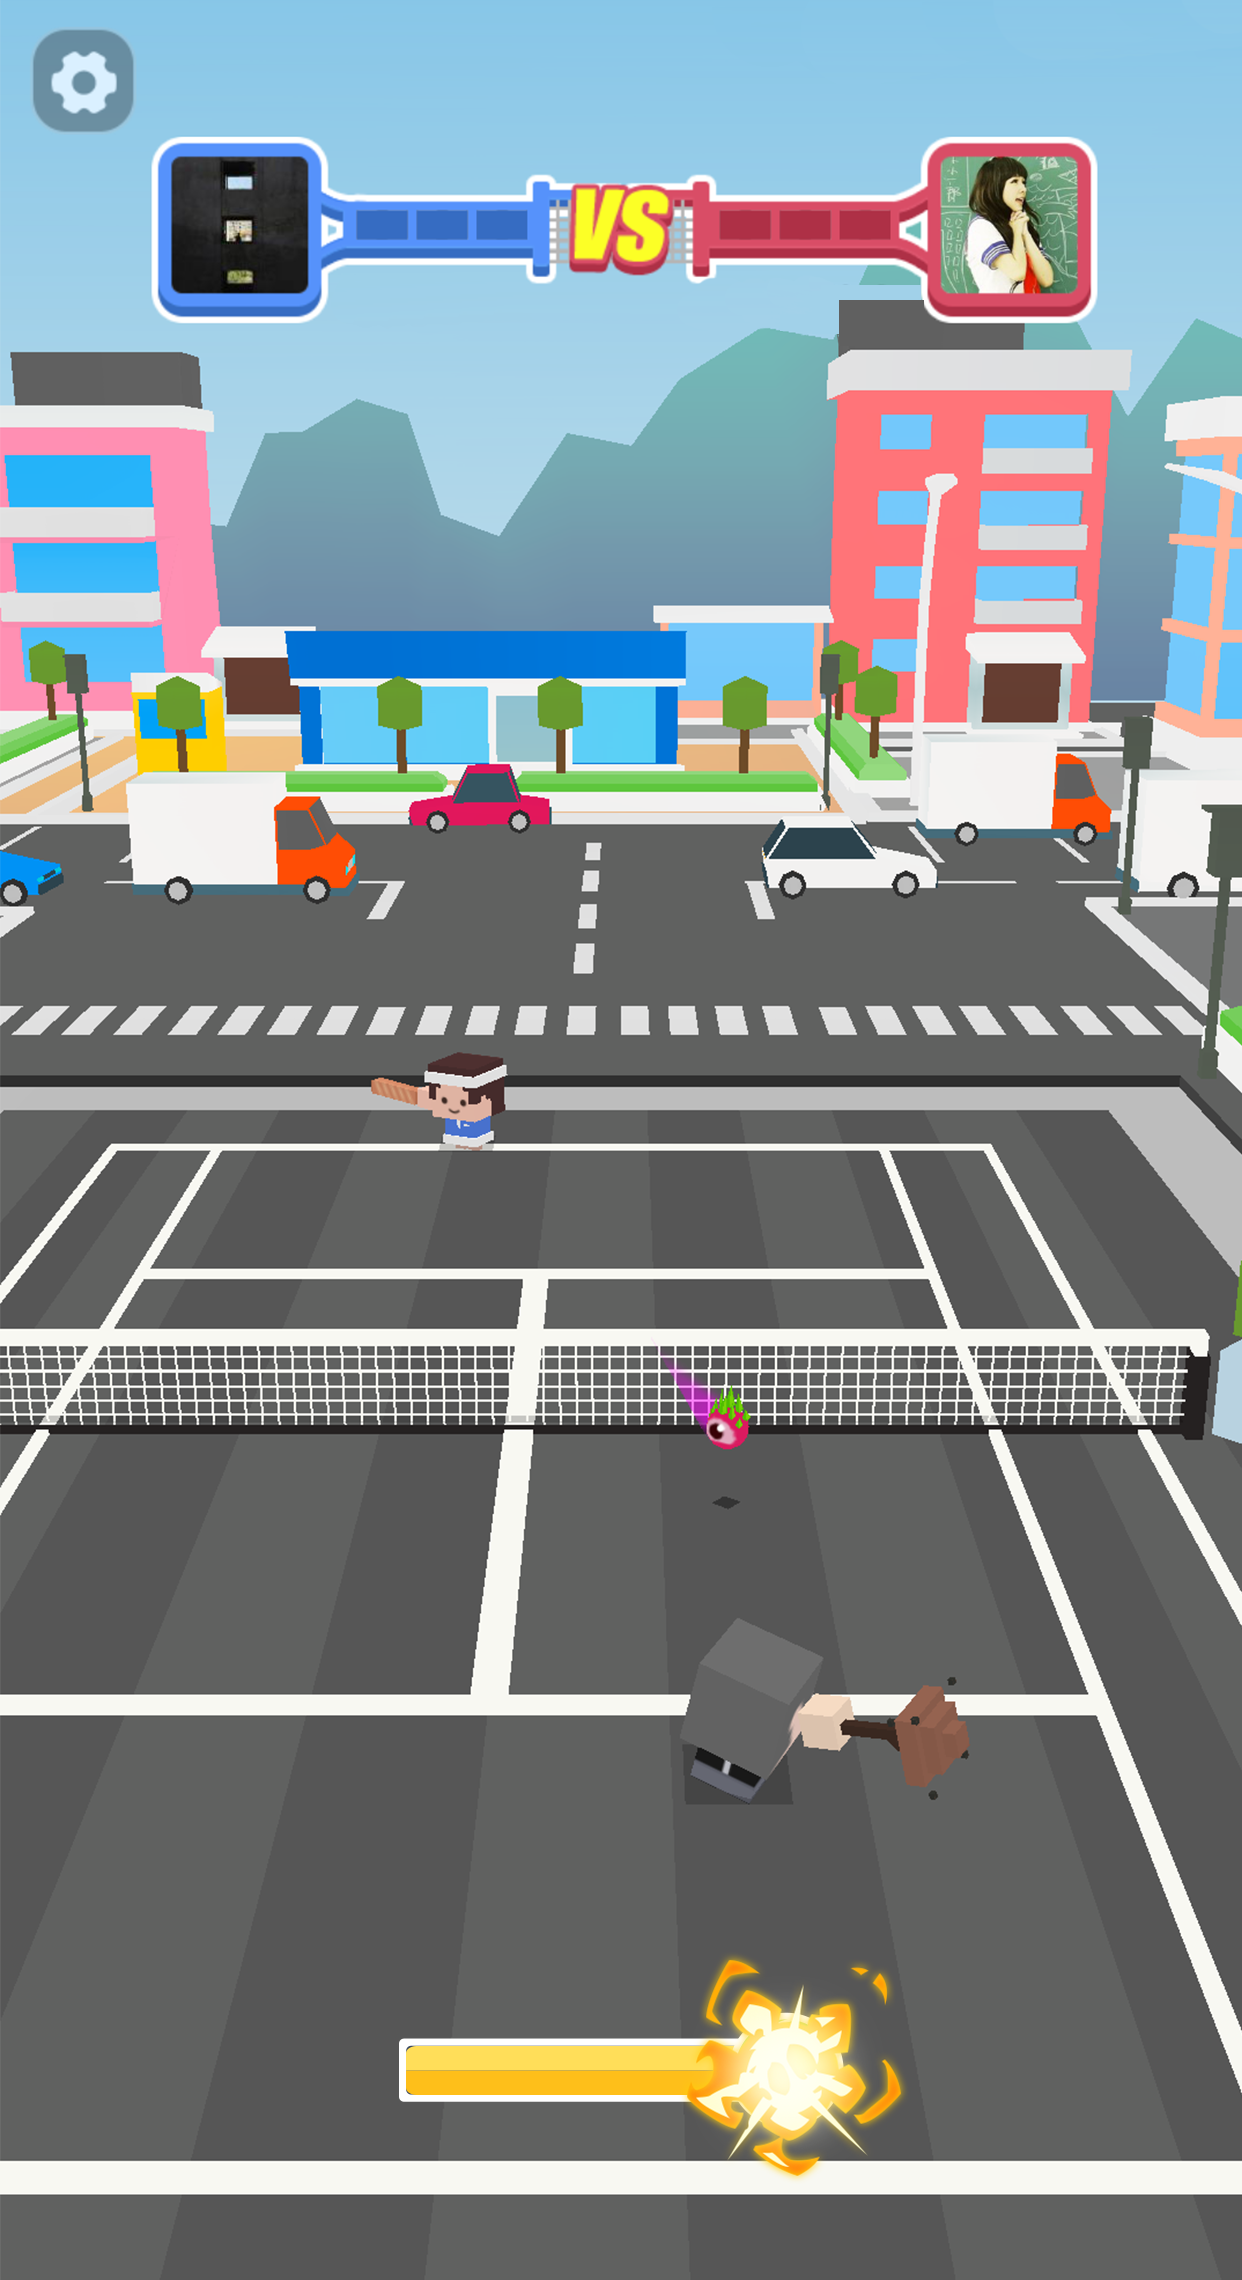 Screenshot of Mini Tennis